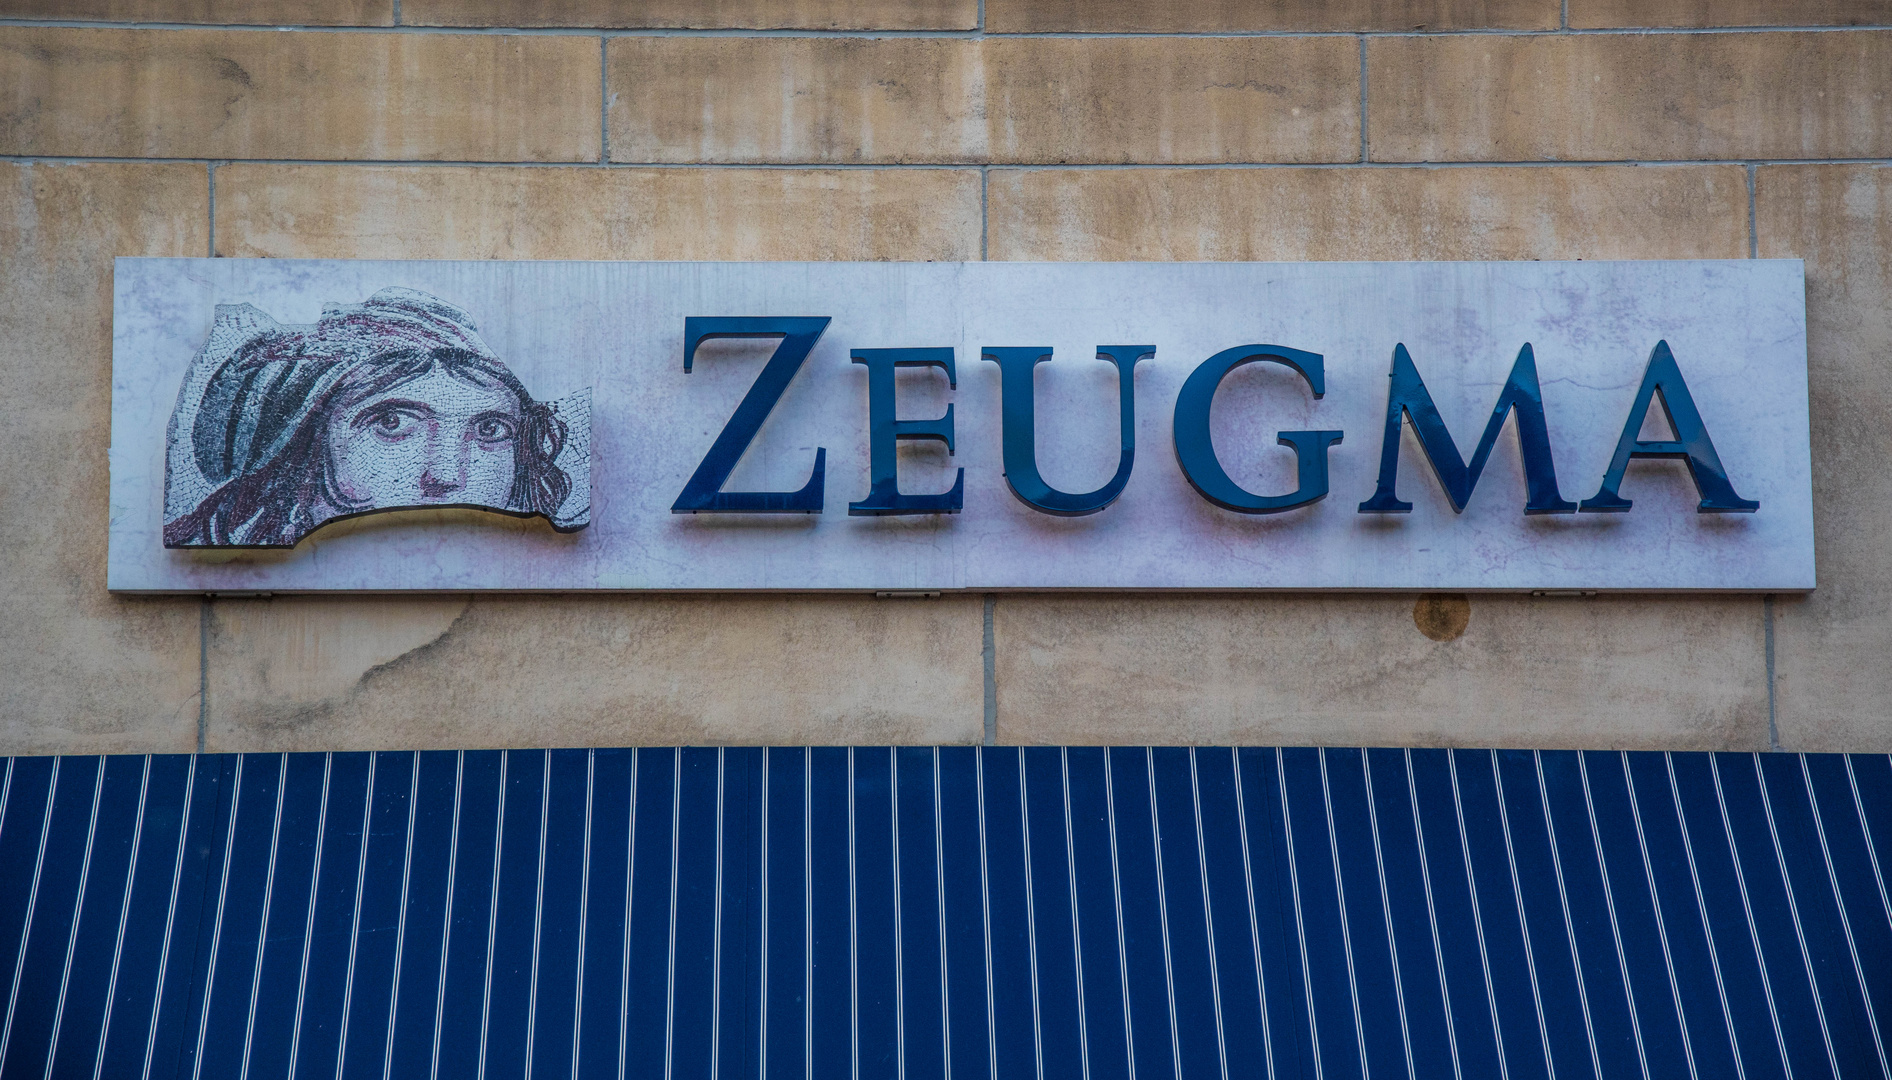 Zeugma is watching, but he isn't talking